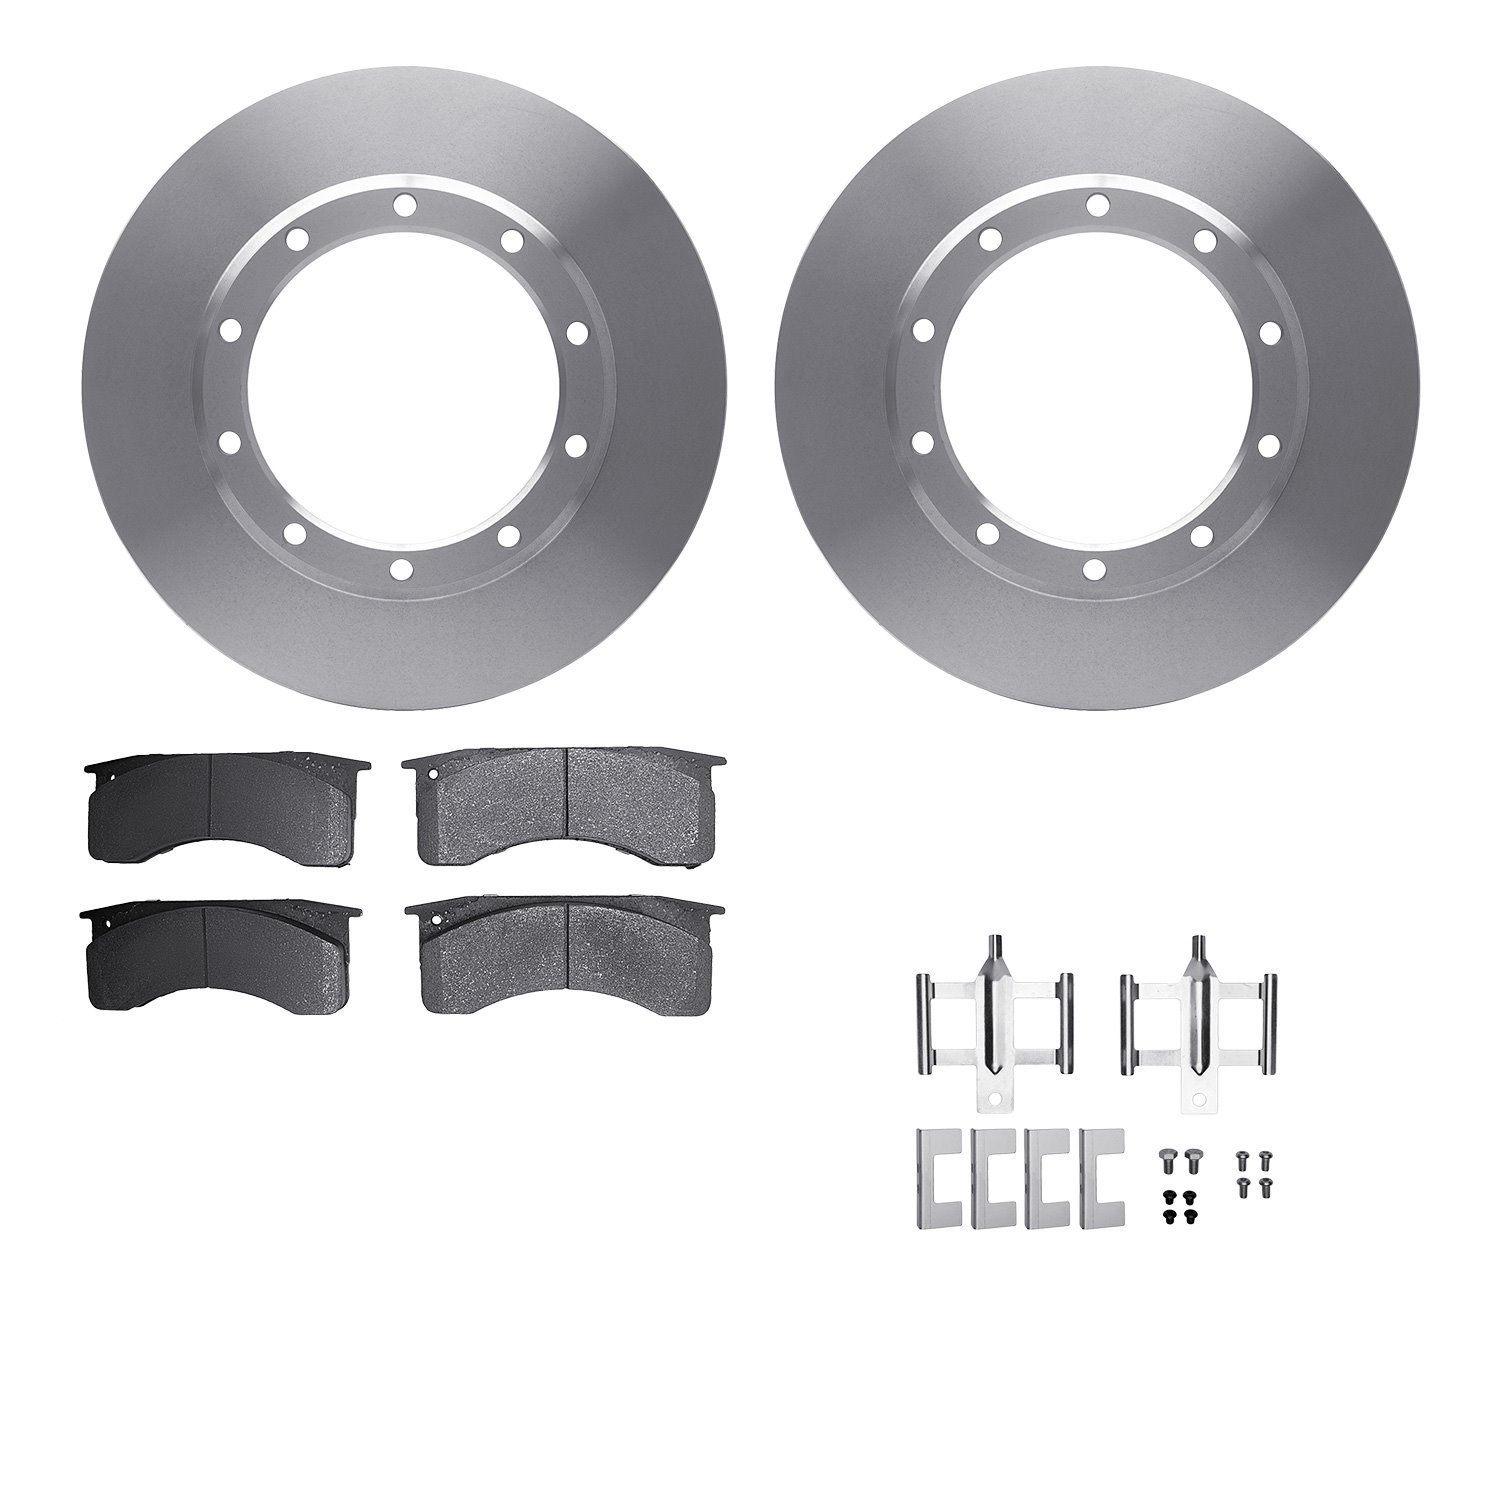 6212-99771 Brake Rotors w/Heavy-Duty Brake Pads Kit & Hardware, Fits Select Multiple Makes/Models, Position: Rear, Front